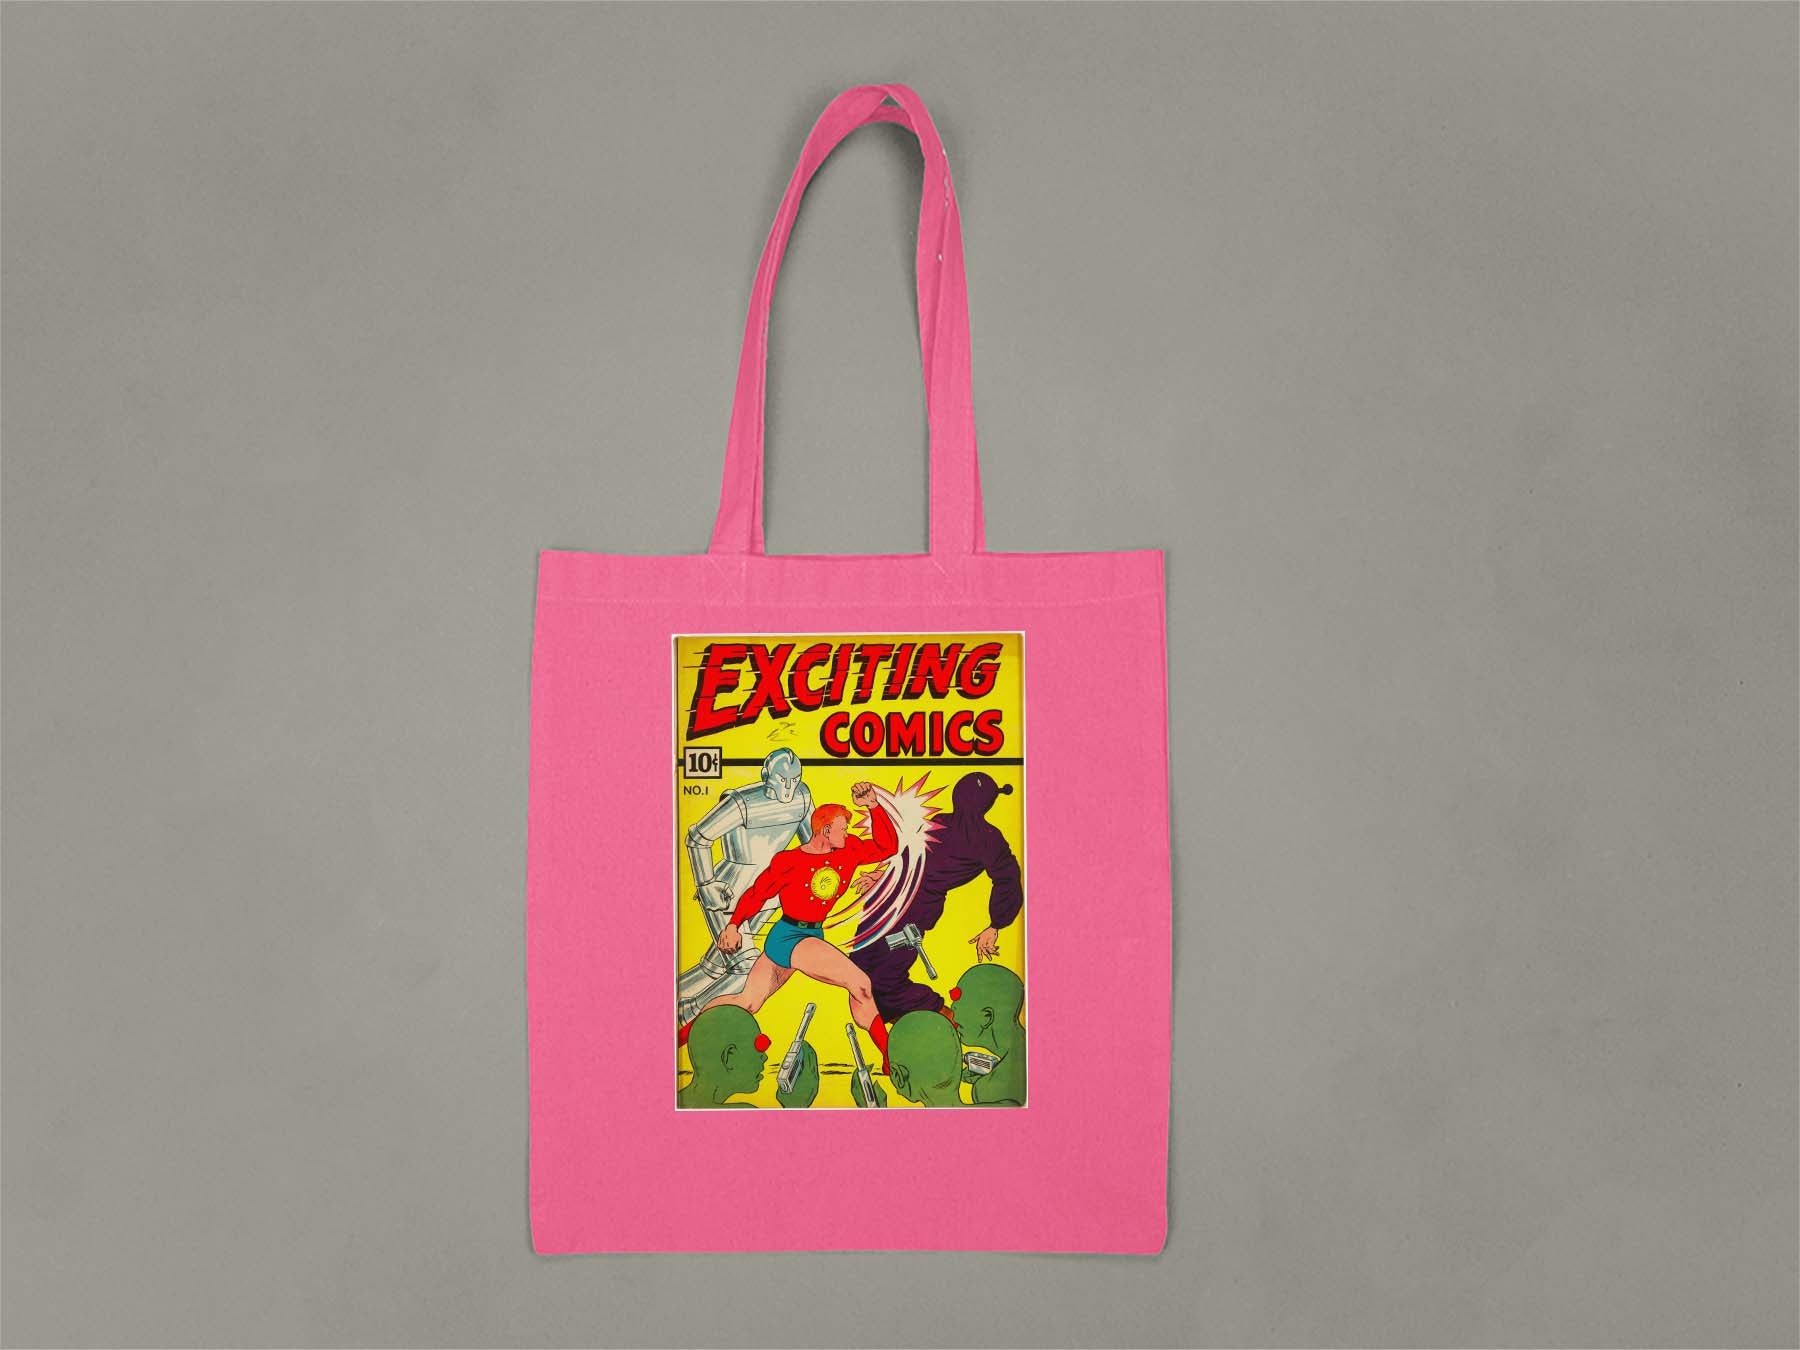 Exciting Comics No.1 Tote Bag  Hot Pink